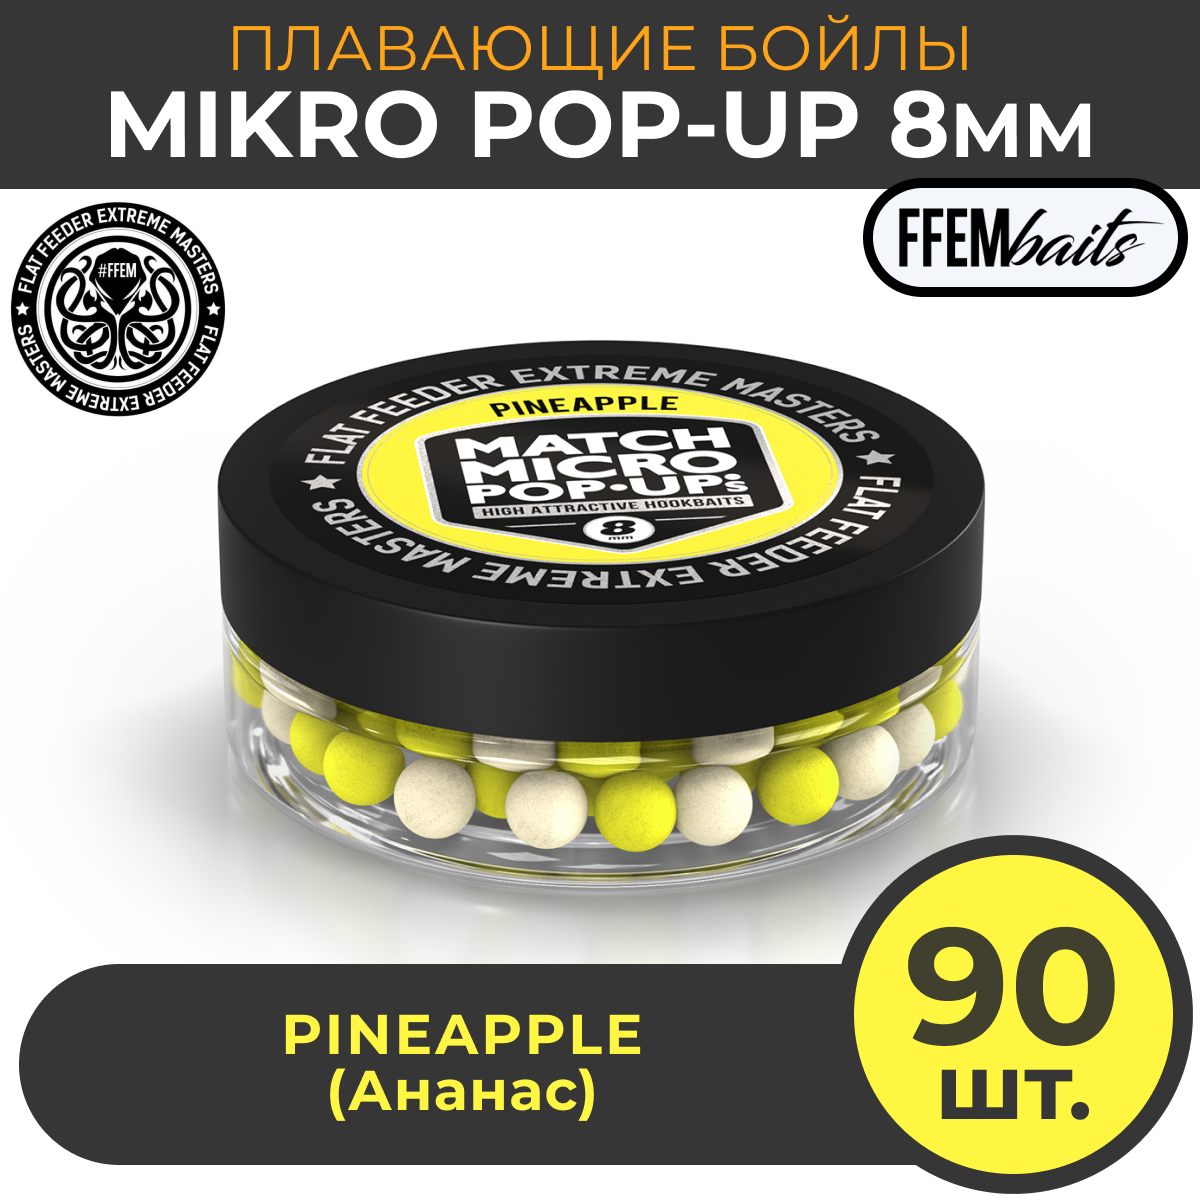 Плавающие бойлы Match Micro POP-UP 8 мм, насадочные поп-ап / FFEM Pop-Up Micro Pineapple 8mm Ананас